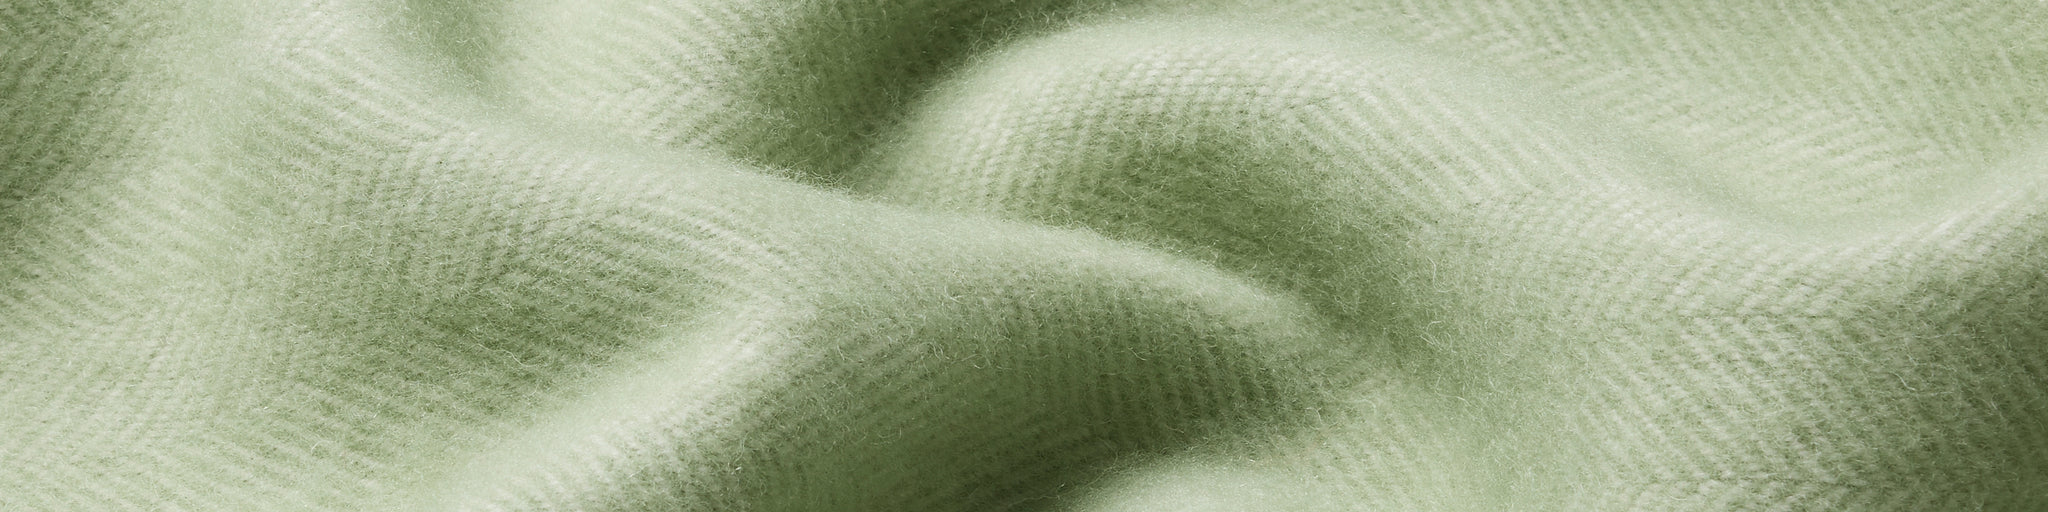 Close up of herringbone weave in pale green